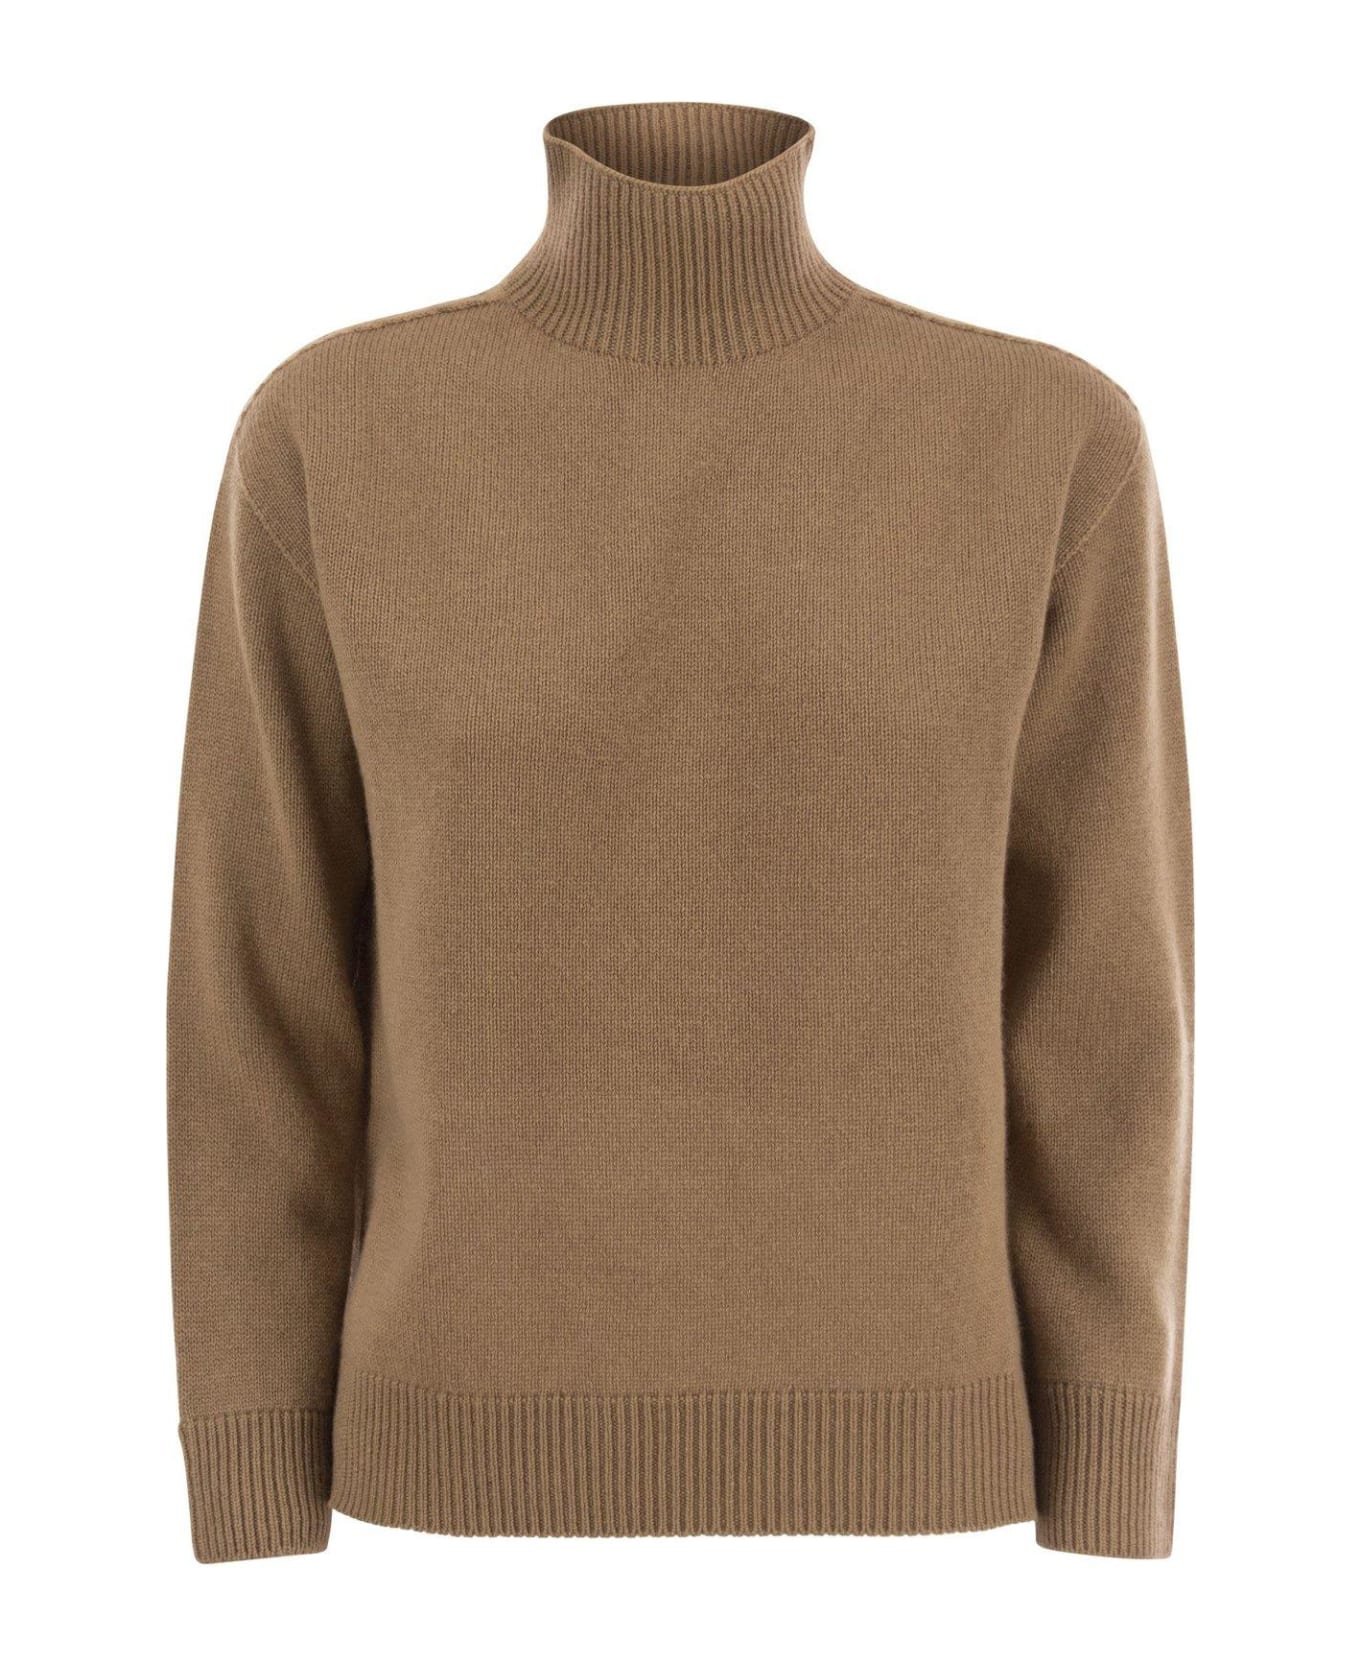 'S Max Mara Cashmere Turtleneck Sweater - Camel